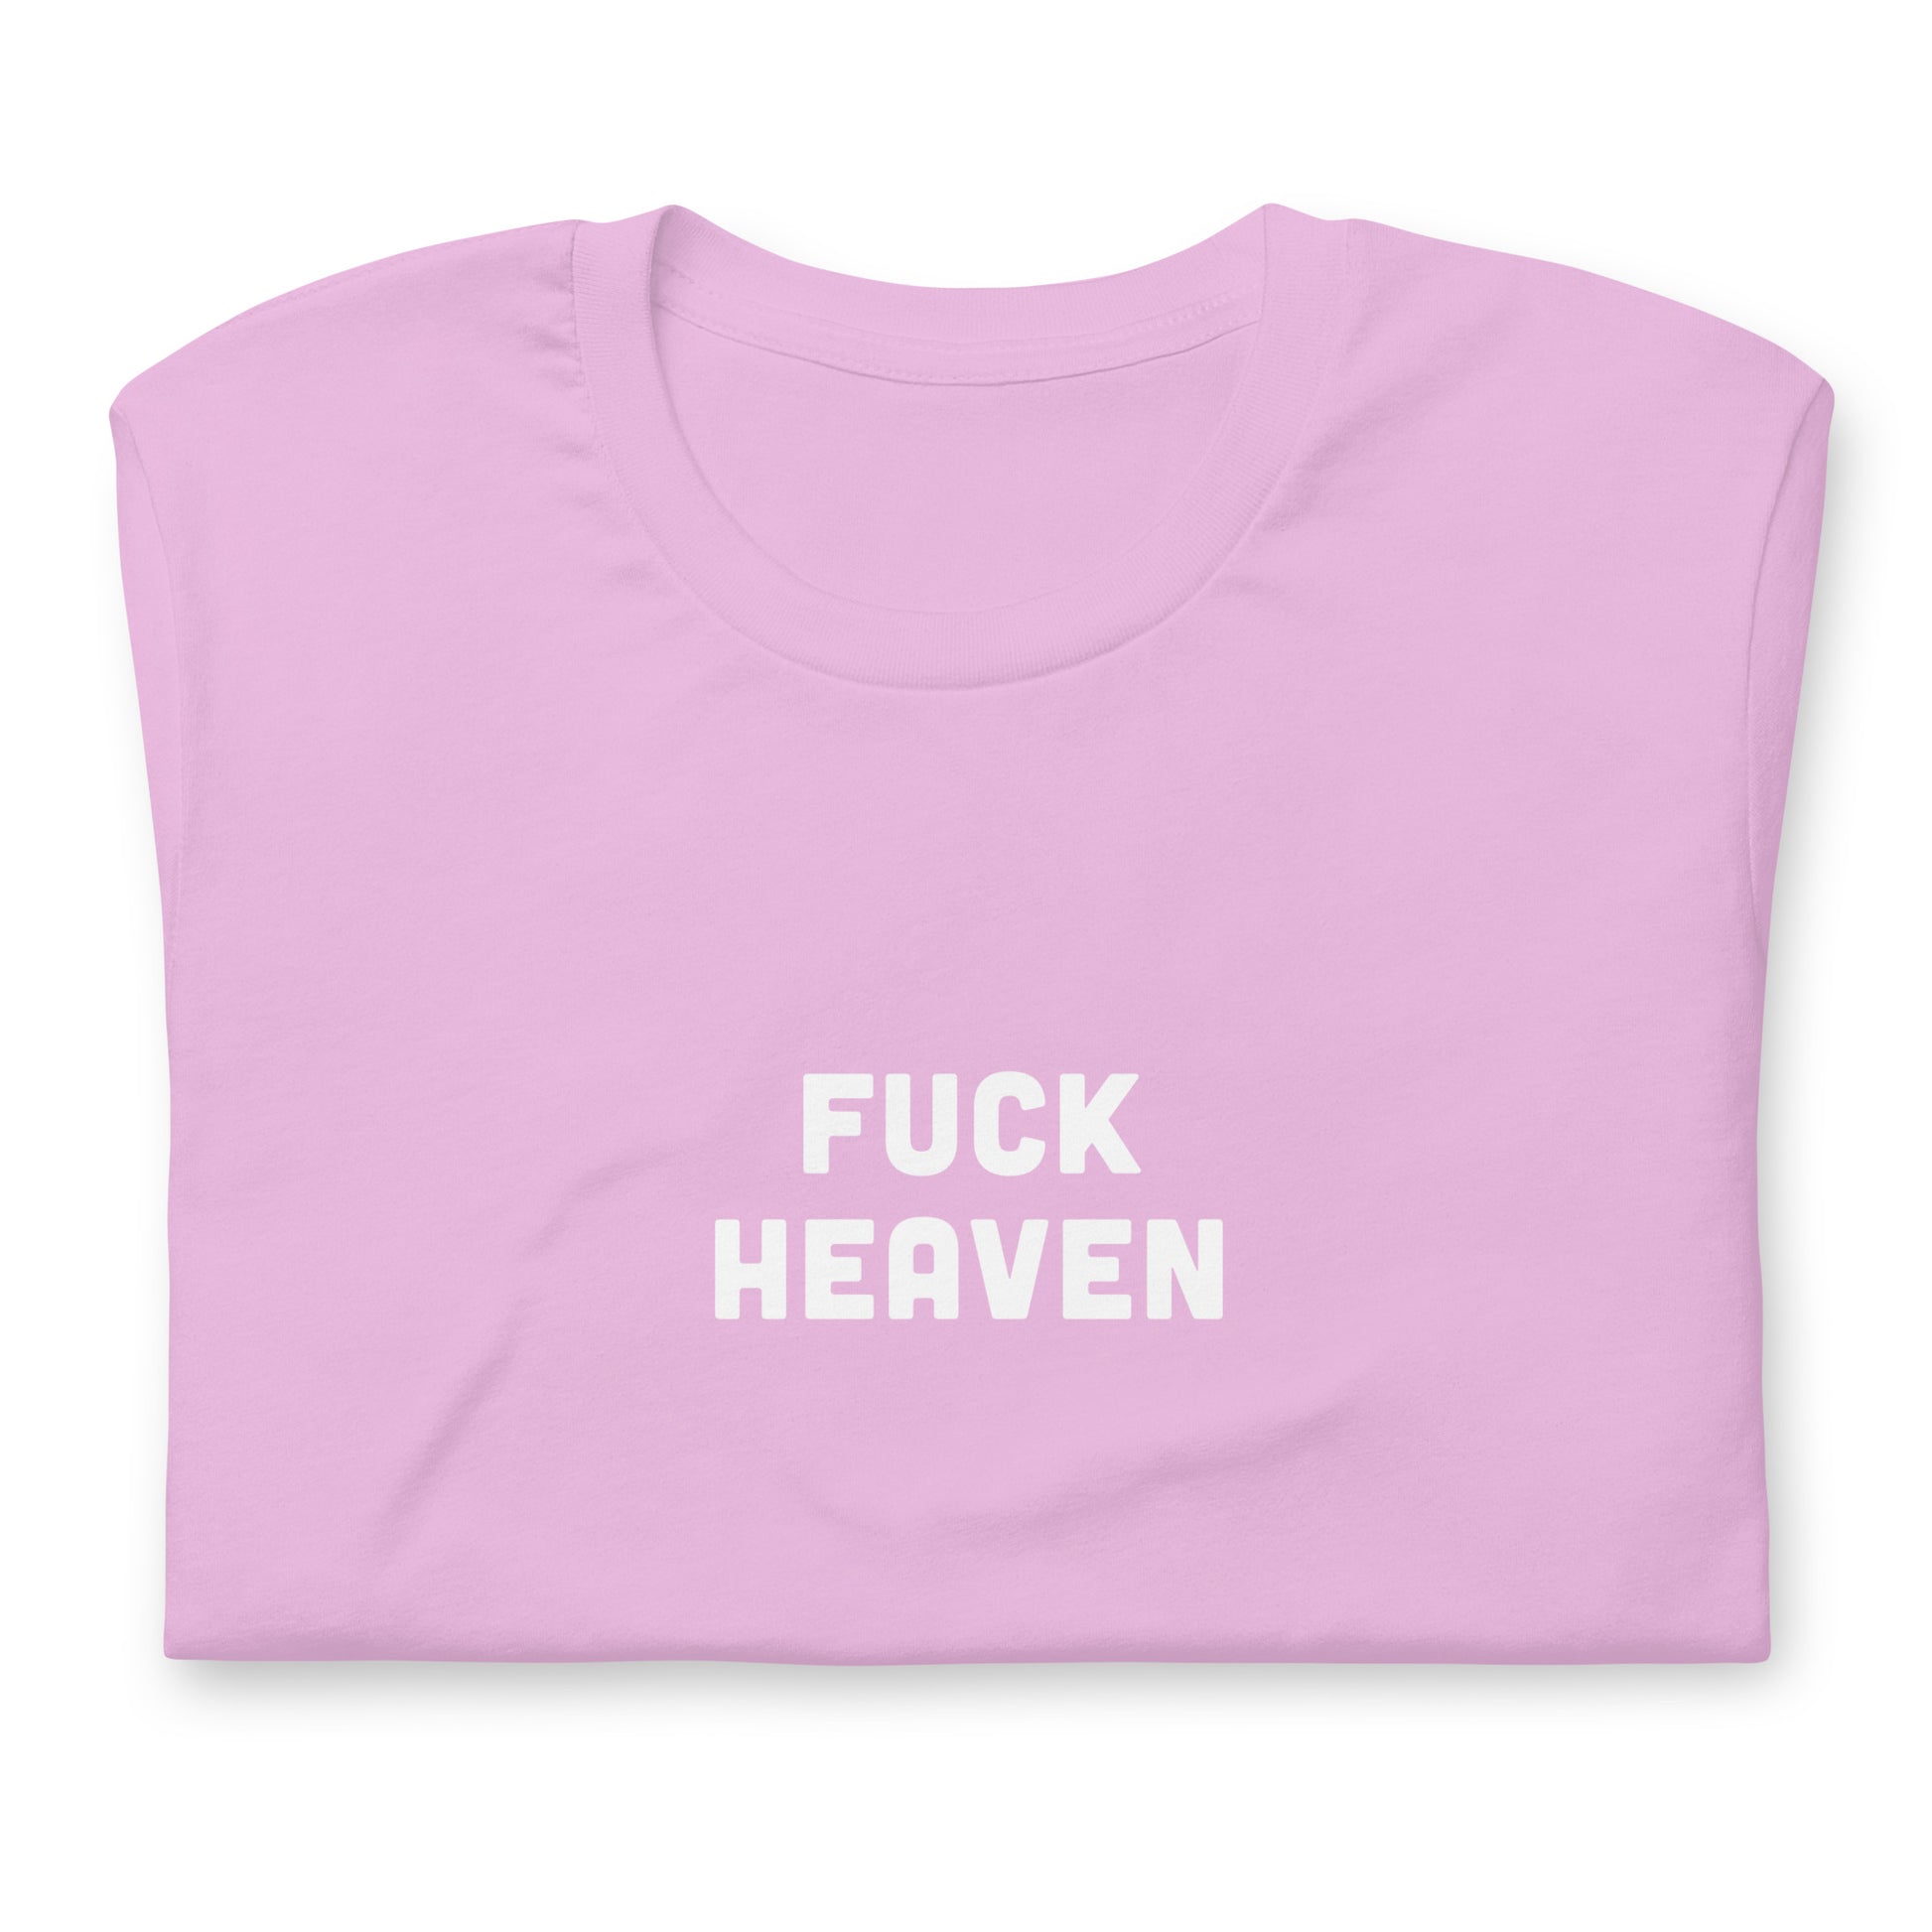 Fuck Heaven T-Shirt Size 2XL Color Forest